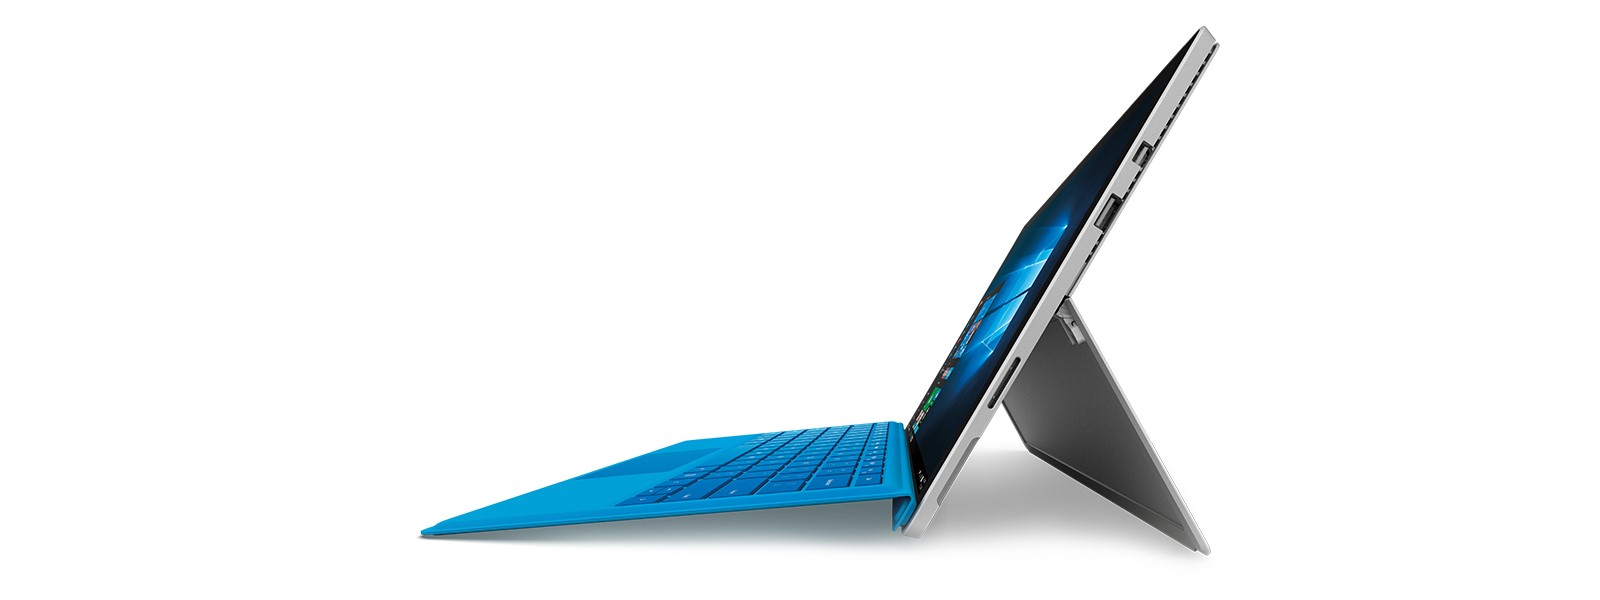 Microsoft Surface Pro 4 7AX-00001 Tablet Intel Core i5 6300U (2.40 